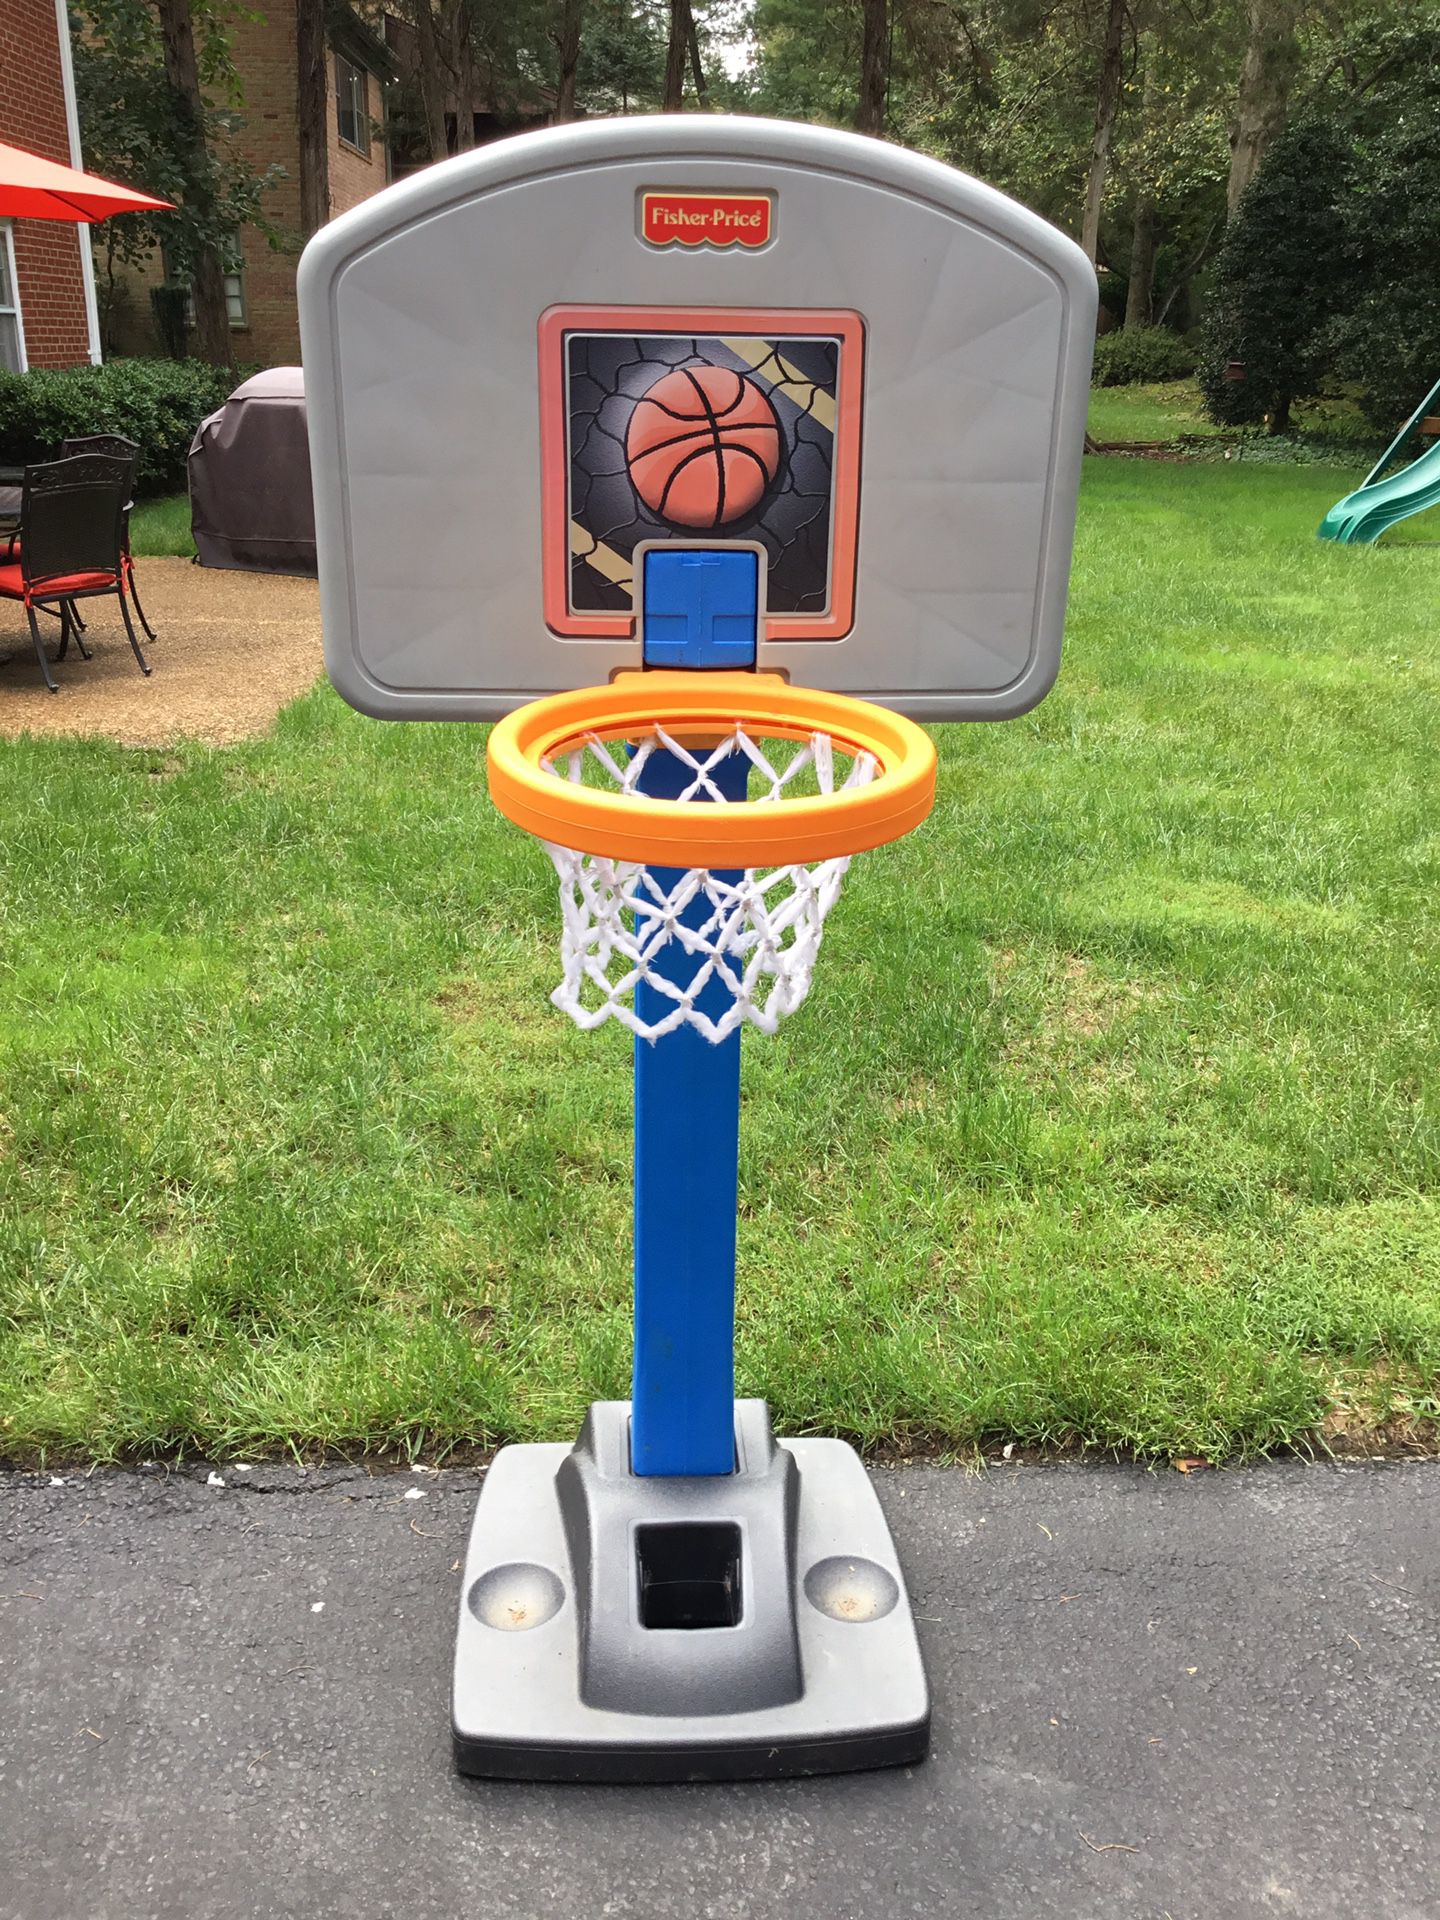 Children’s outdoor Fisher Price adjustable basketball net.